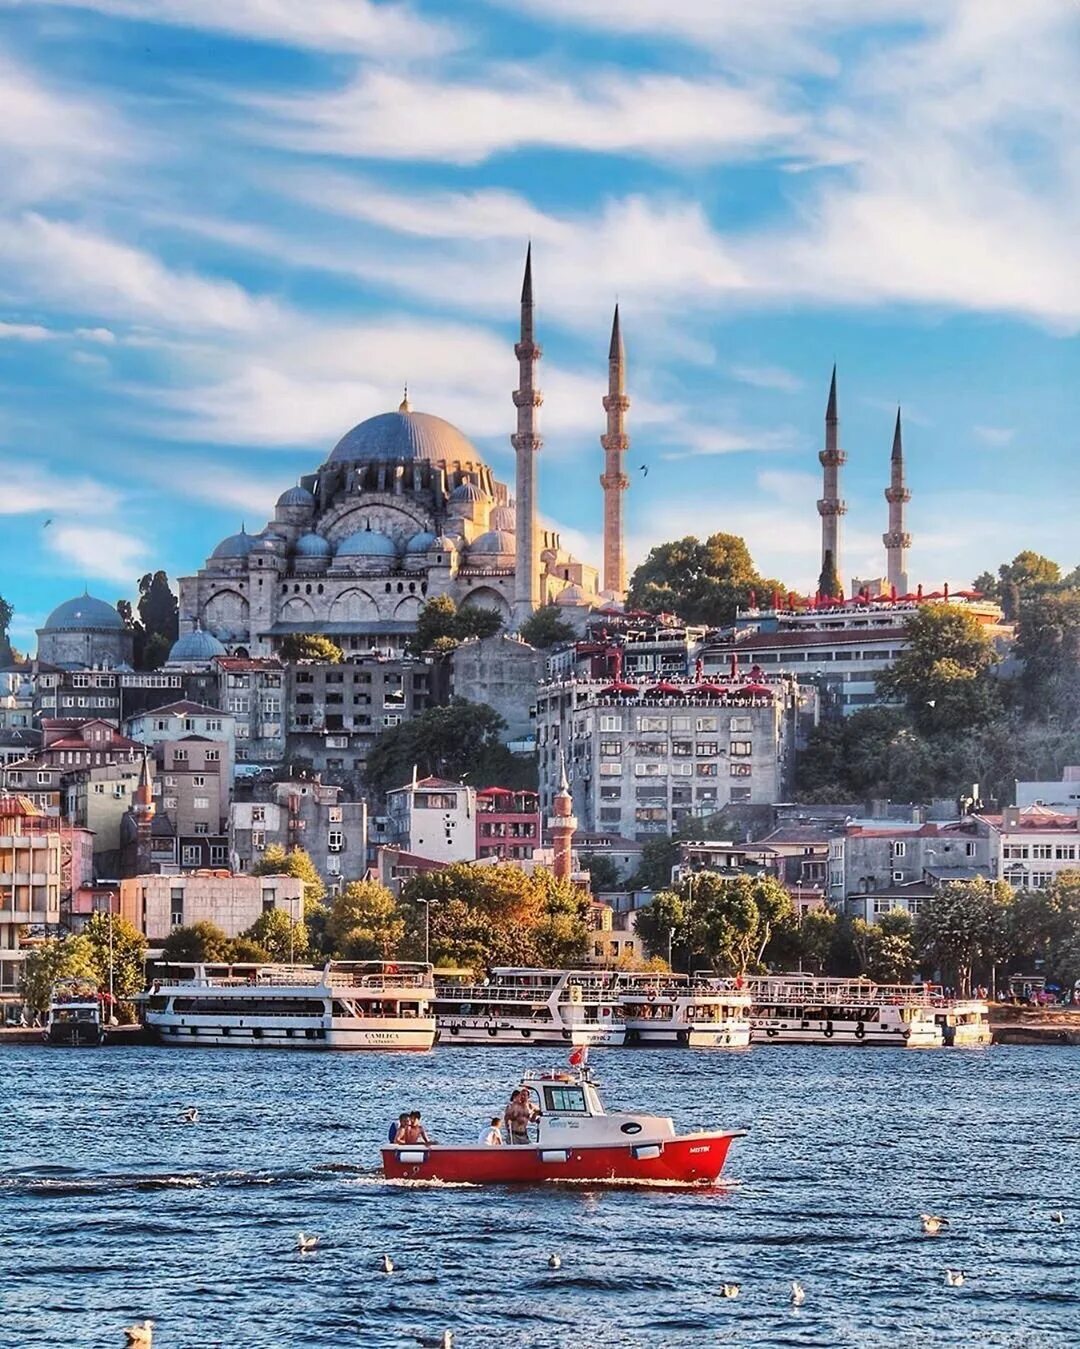 Город султанахмет. Босфор Турция Стамбул. Стамбул голубая мечеть Босфор. Сулеймание Стамбул. Бухта золотой Рог Стамбул.